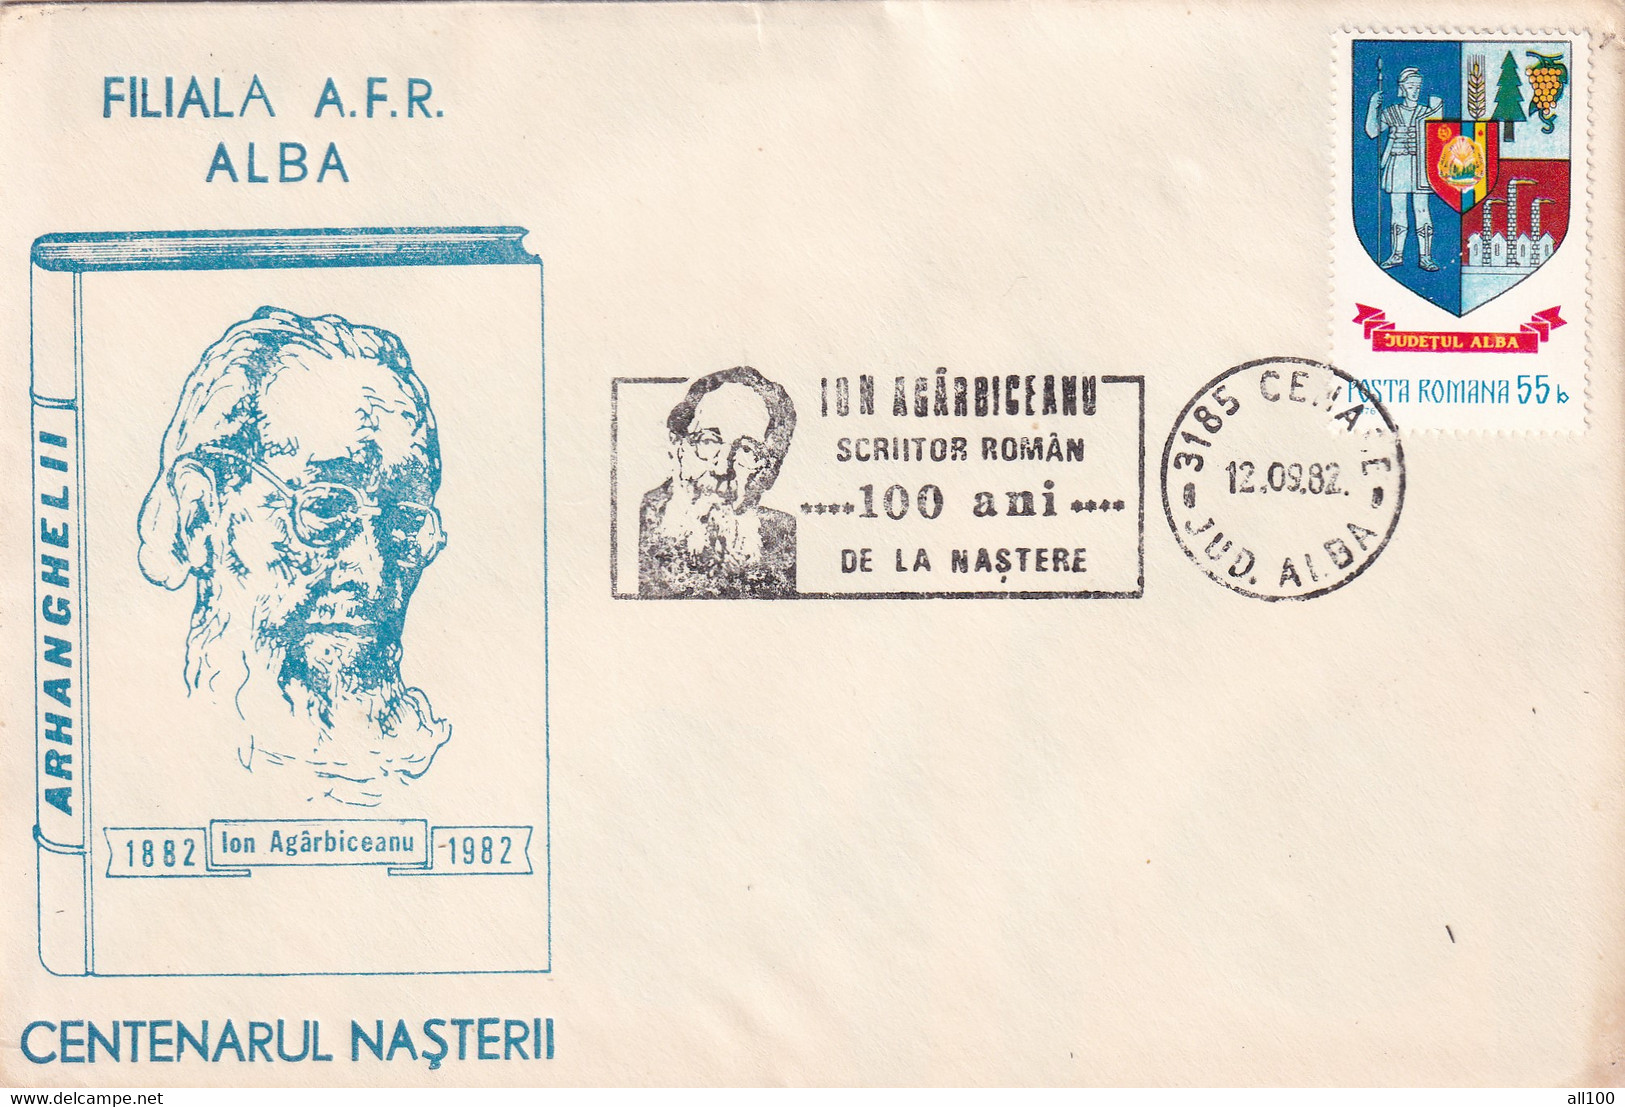 A21967 - Centenarul Nasterii Ion Agarbiceanu Arhangheli Alba Cover Envelope Used 1982 RS Romania Stamp Judetul Alba - Briefe U. Dokumente